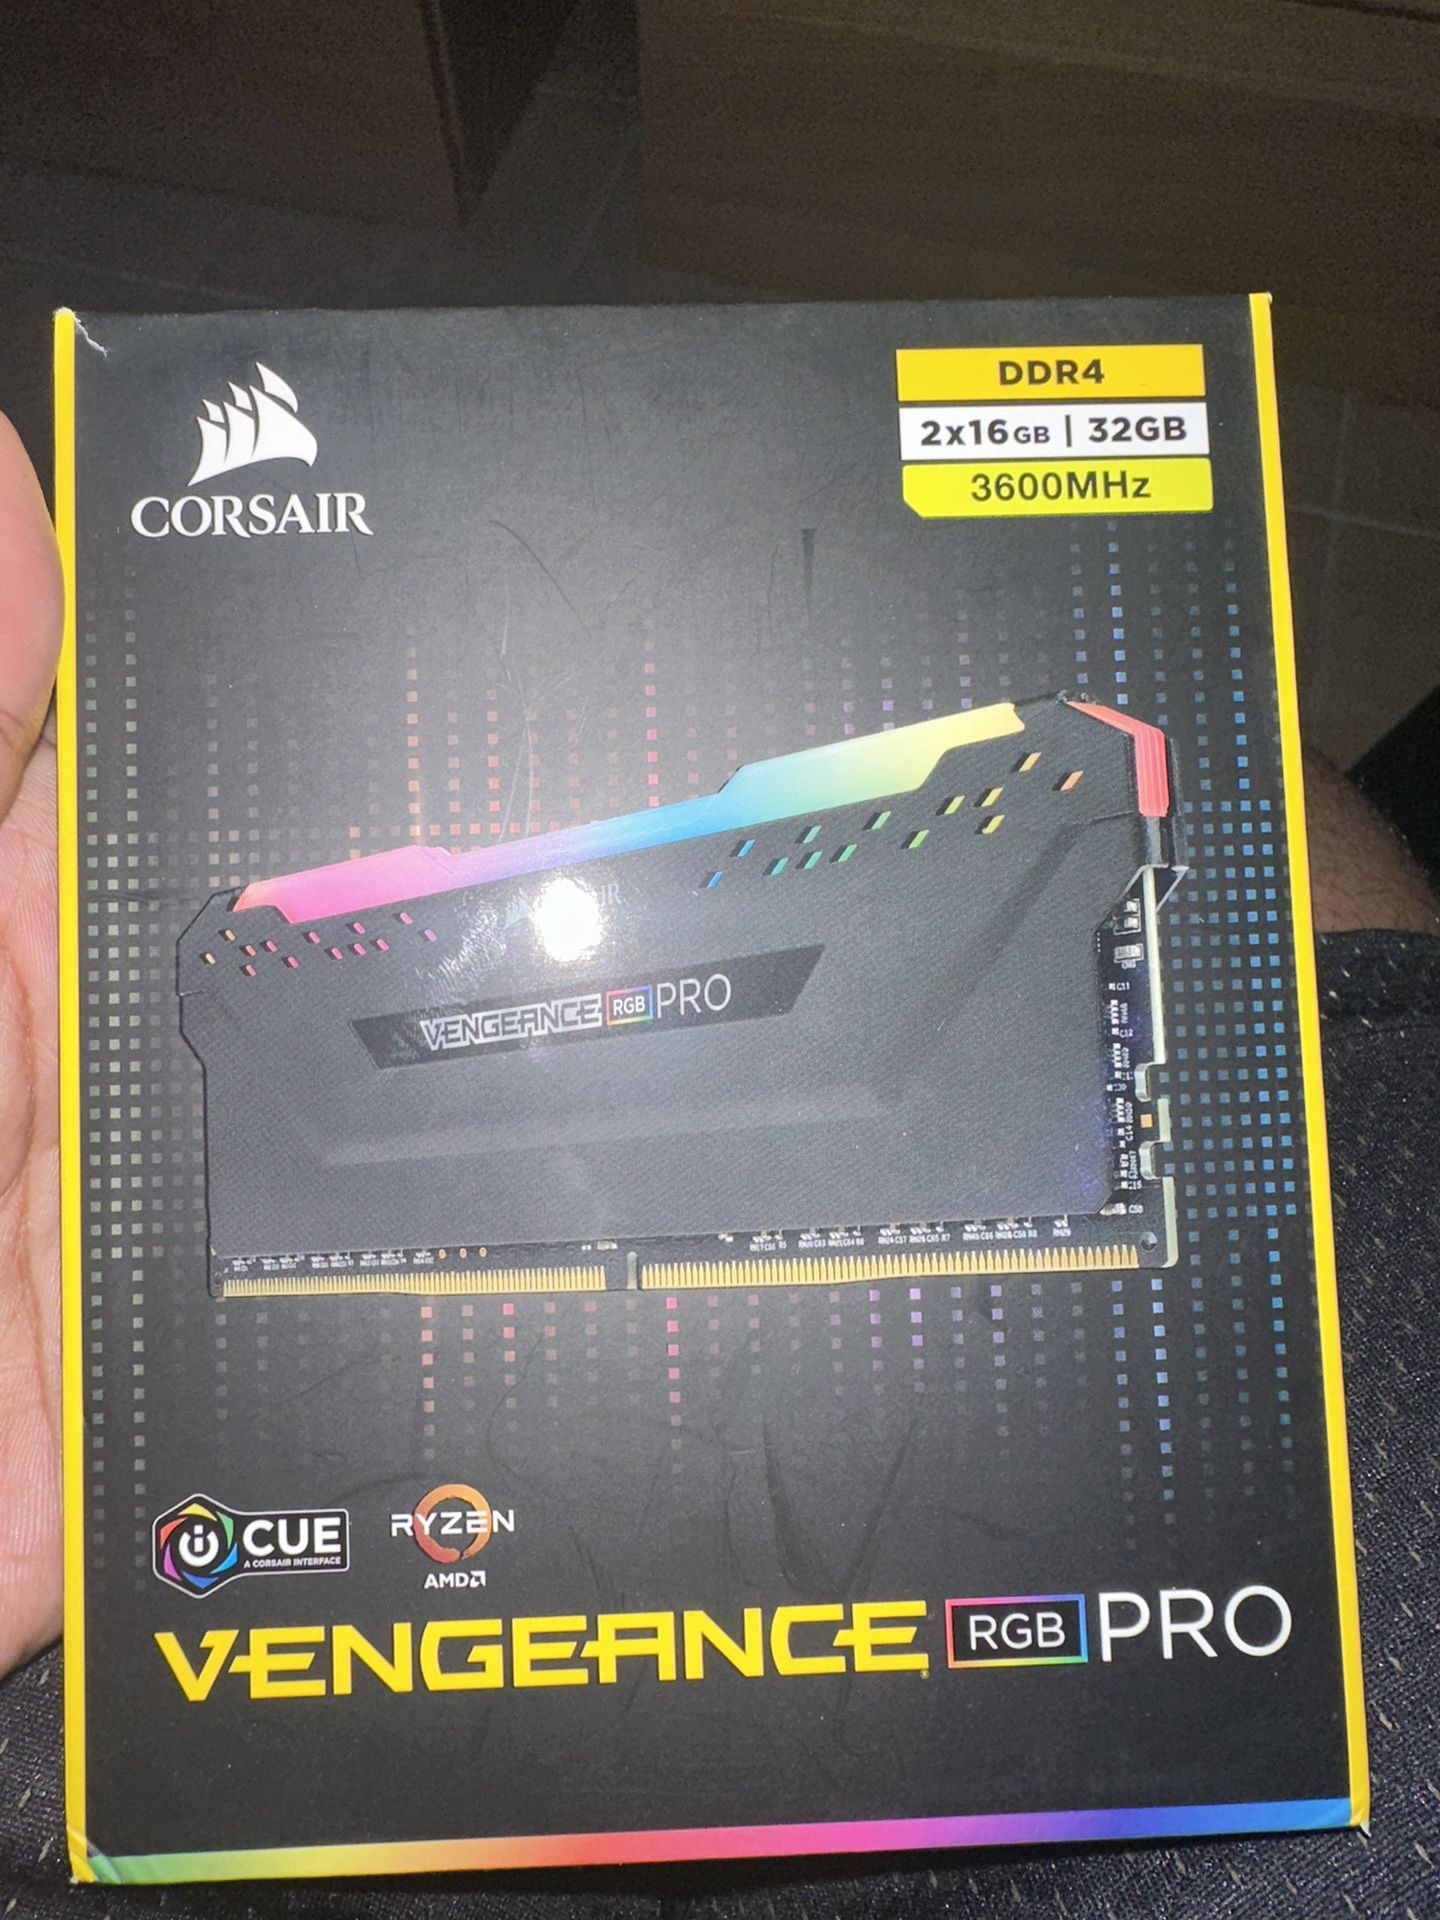 CORSAIR Vengeance RGB Pro DDR4 2x16 3600MHz